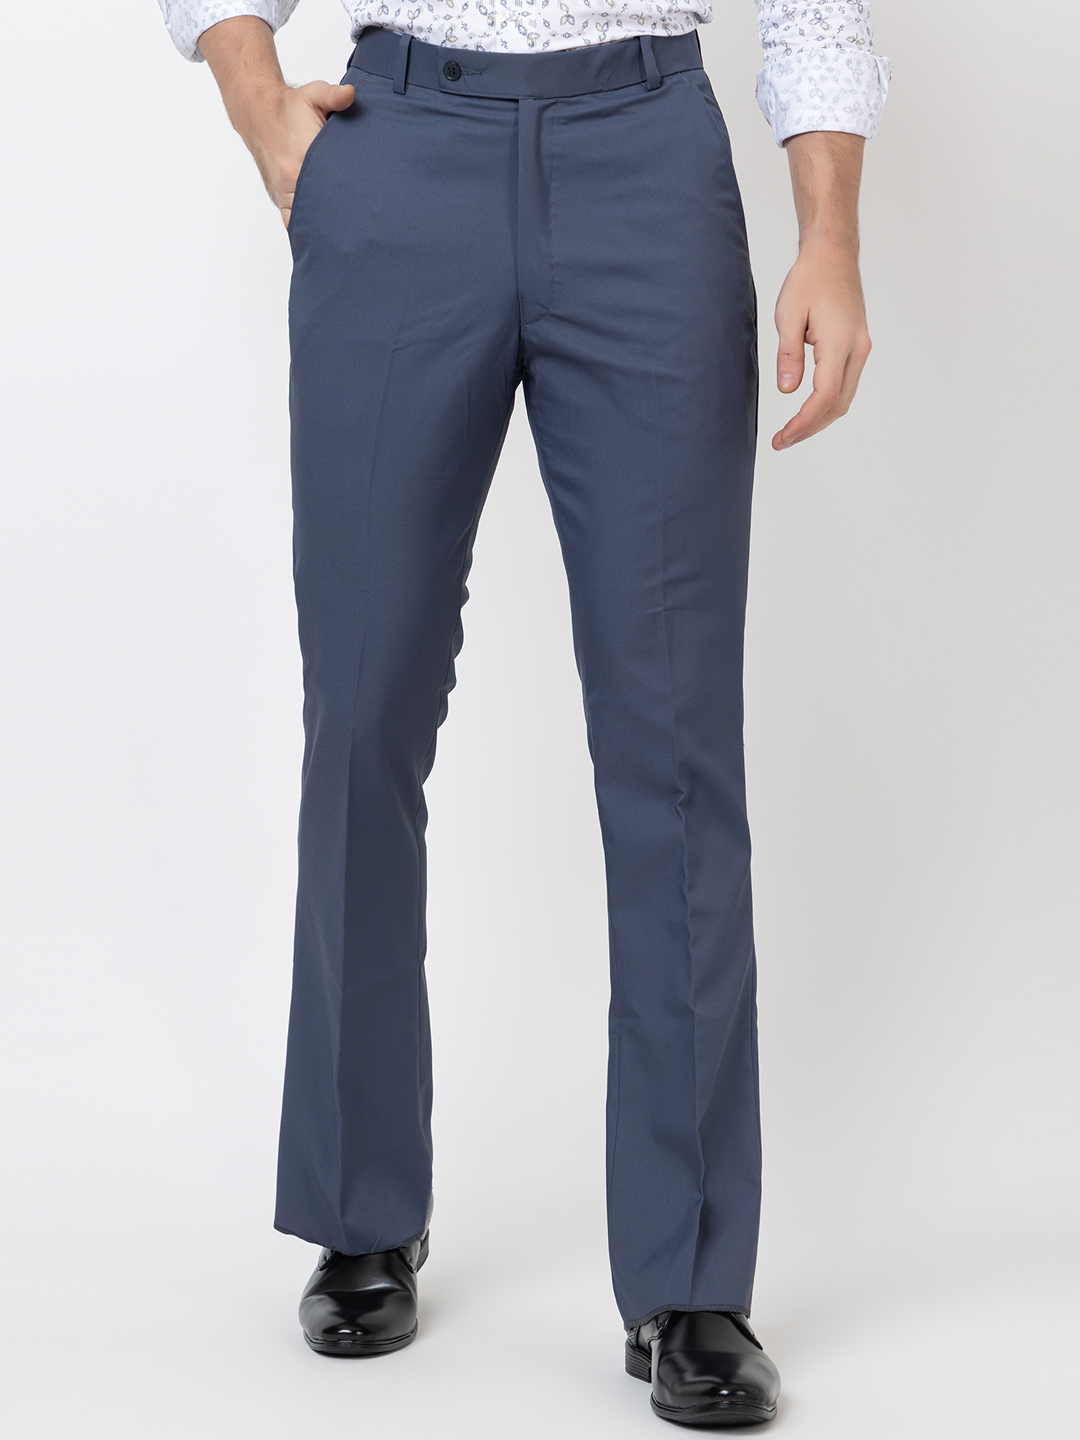 Buy Slate Grey Trouser Bell Bottoms Pant for Men Online In India ...